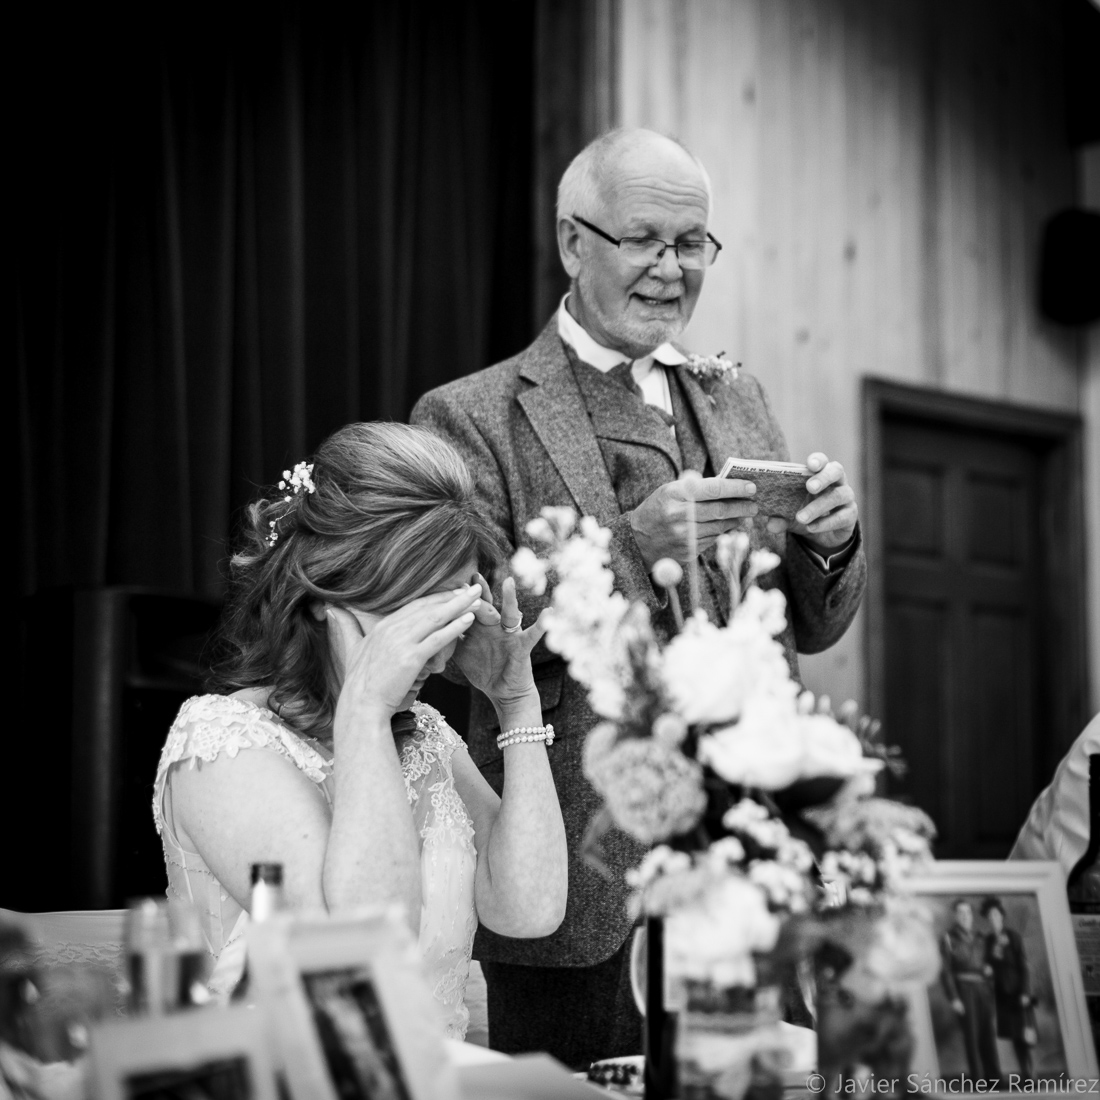 Father of the bride wedding speech by Harrogate wedding photographer.